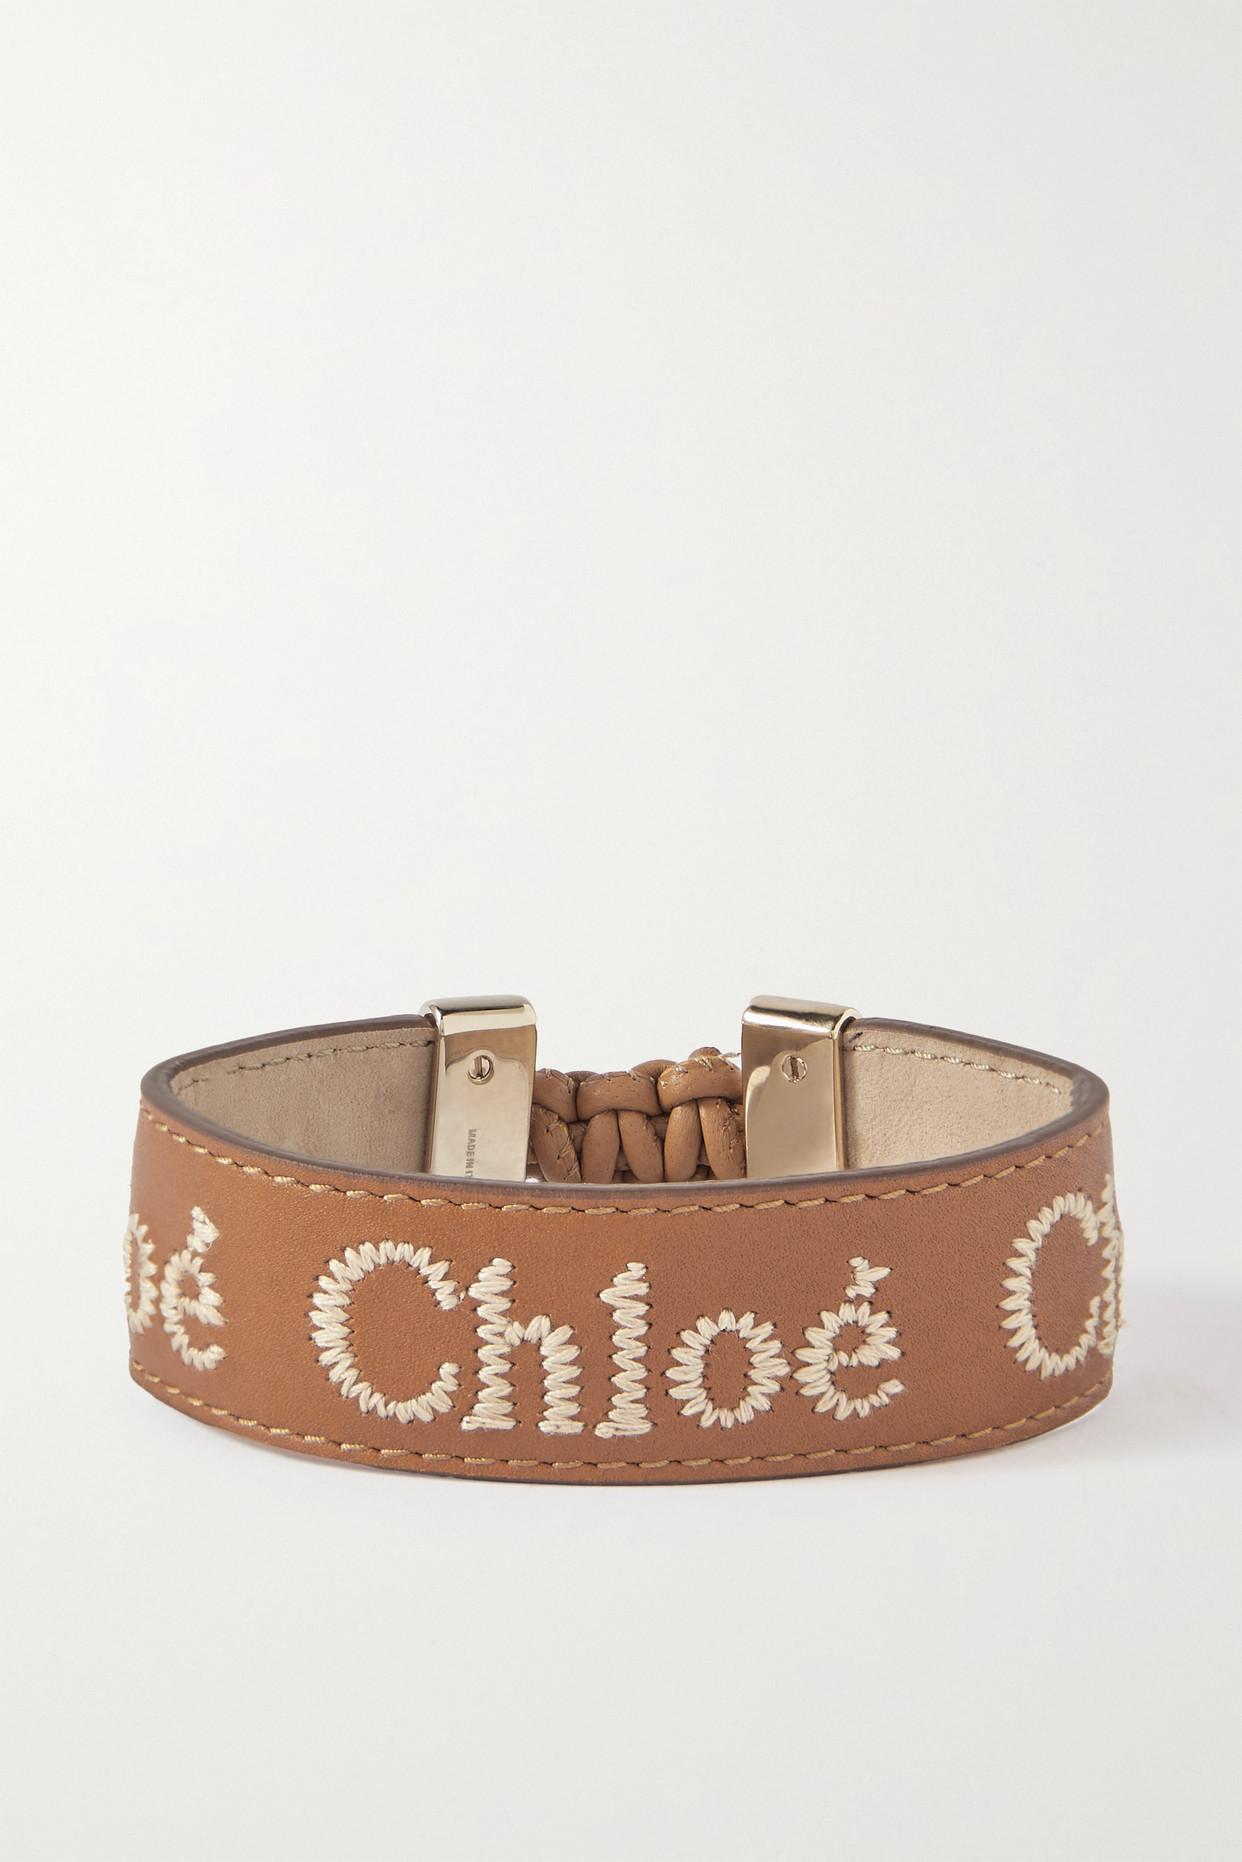 Chloé Woody Armband Aus Besticktem Leder Mit Goldfarbenen Details in Braun  | Lyst DE